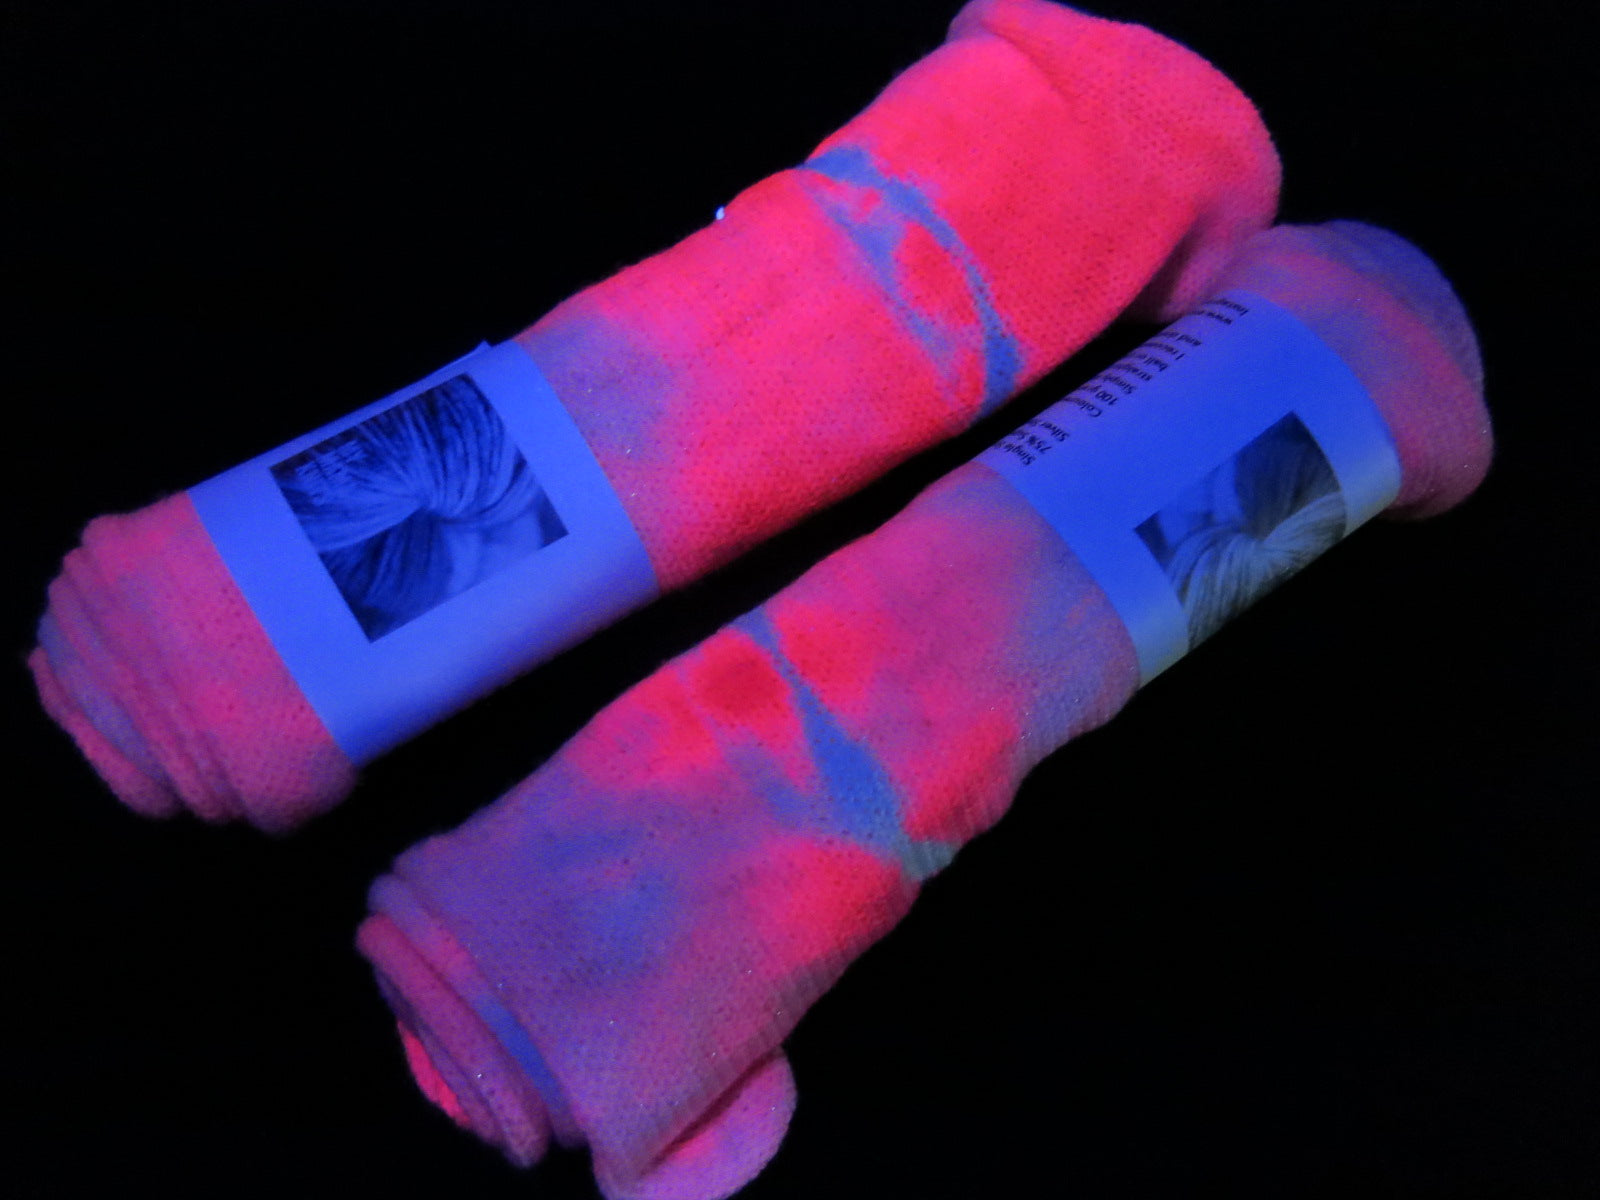 uv reactive pink sock blank fluorescing under black light